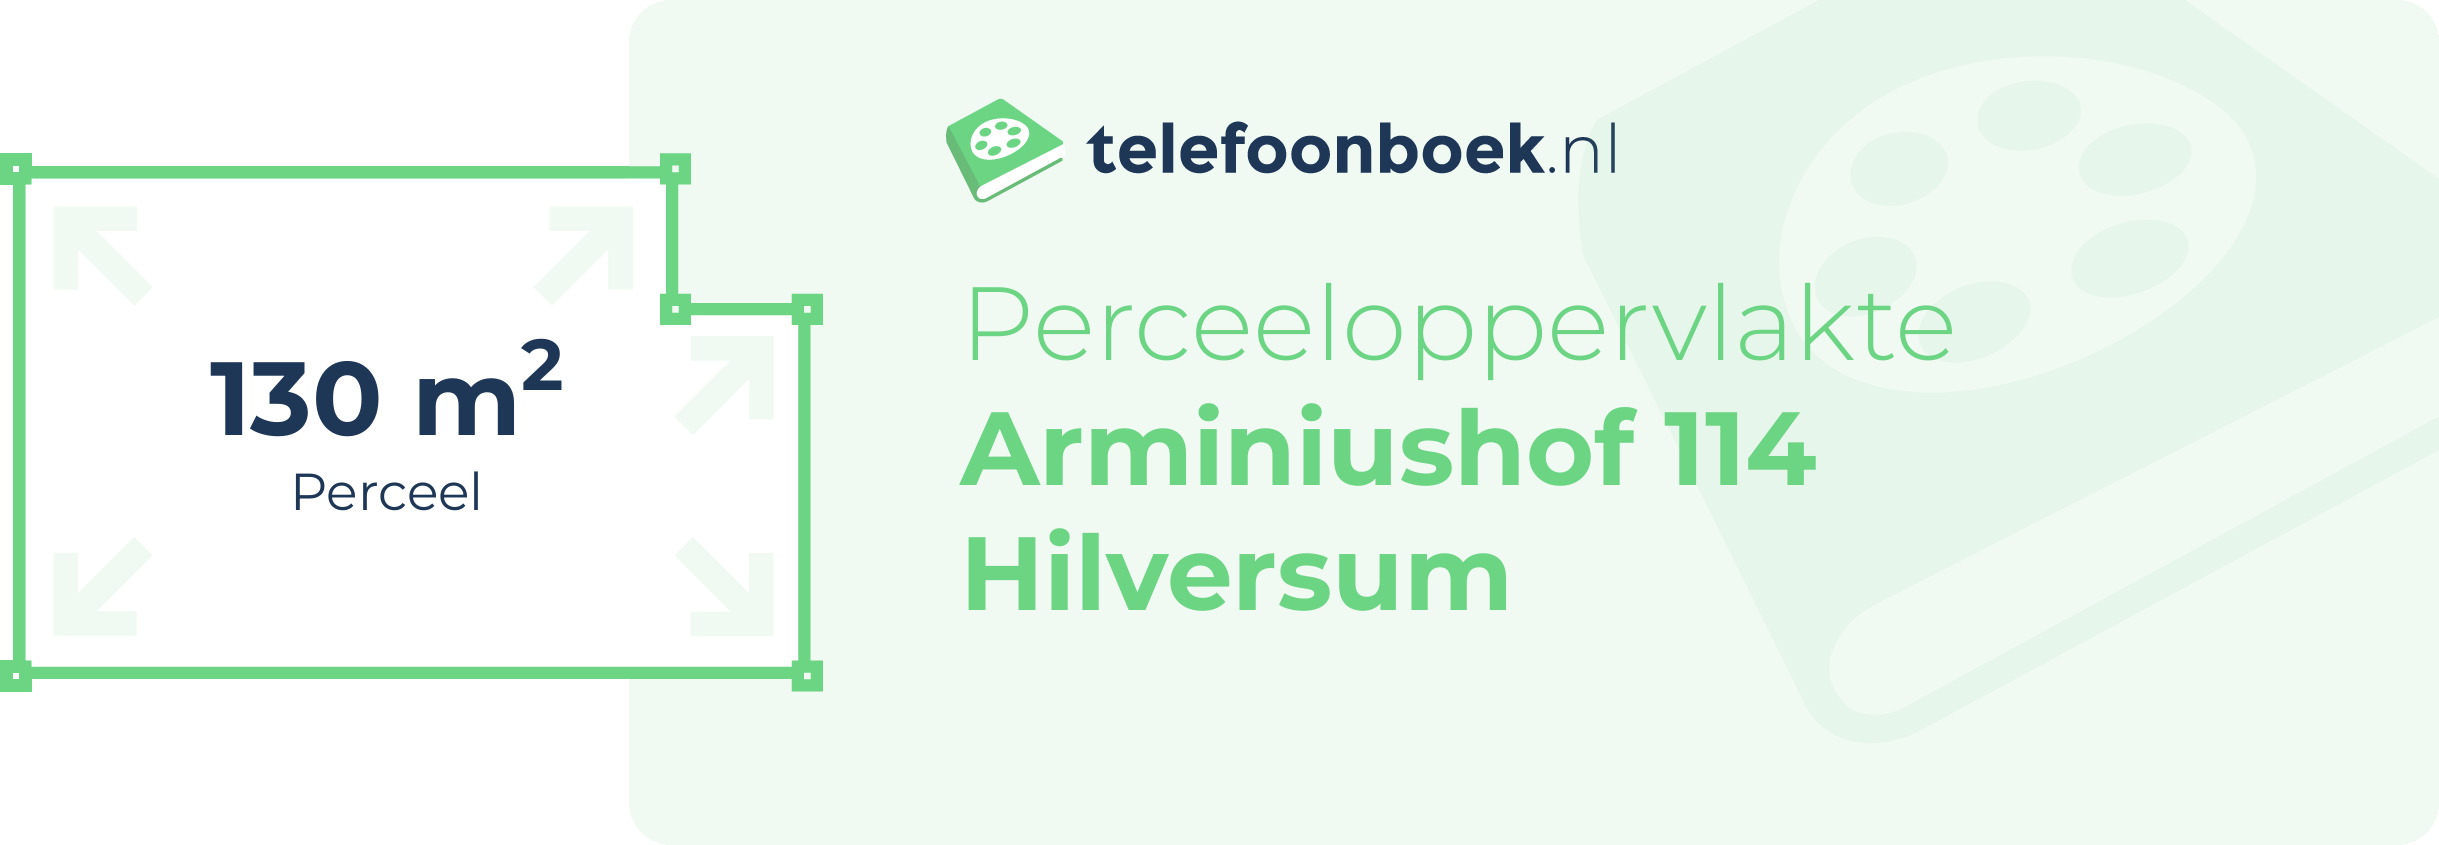 Perceeloppervlakte Arminiushof 114 Hilversum